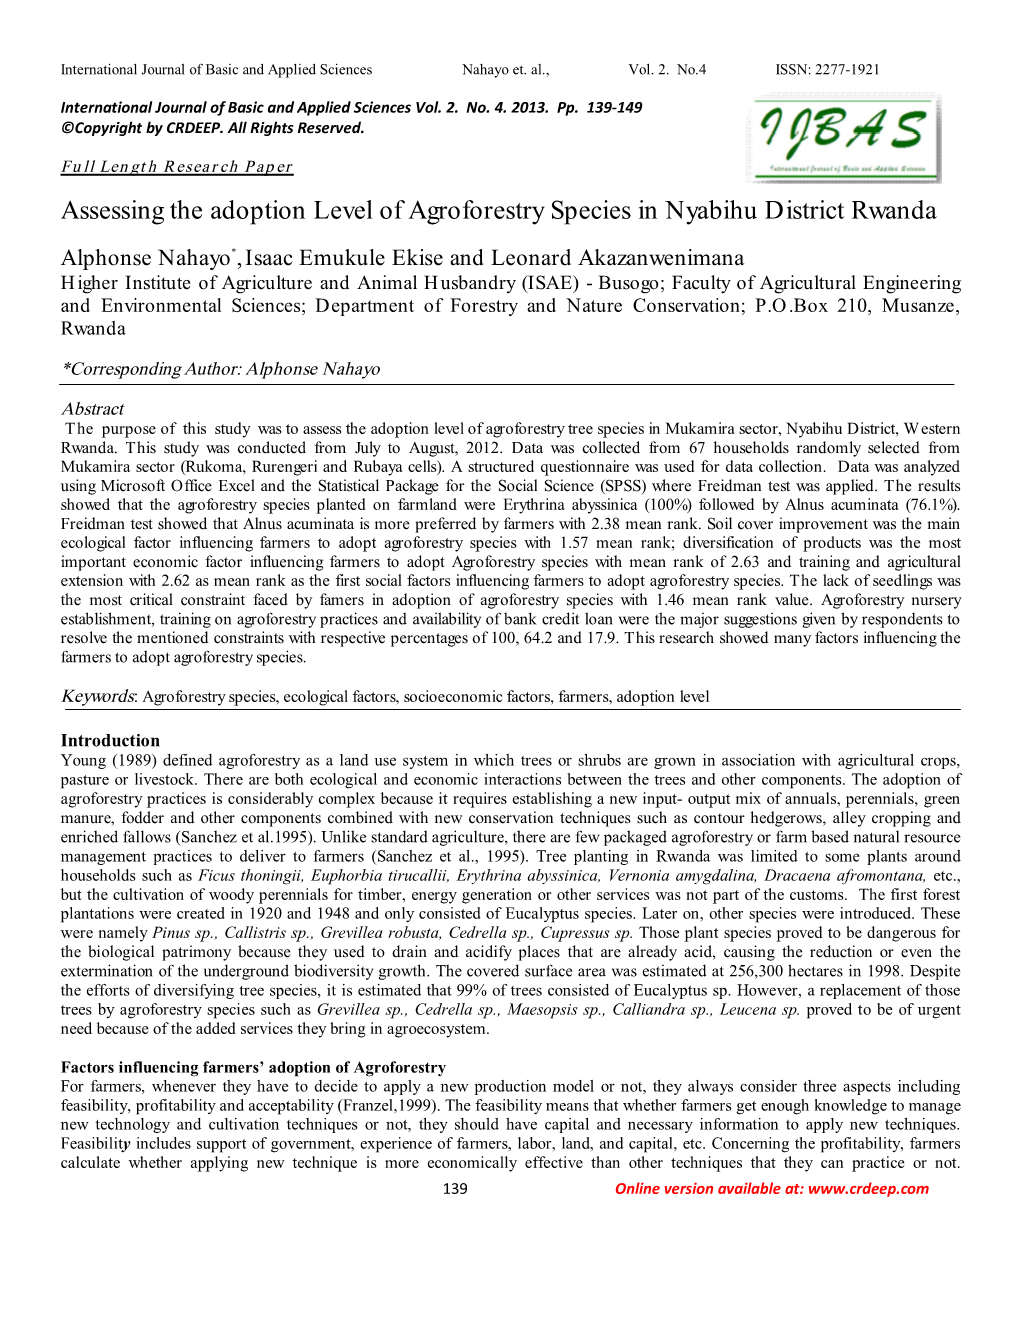 Assessing the Adoption Level of Agroforestry Species in Nyabihu District Rwanda